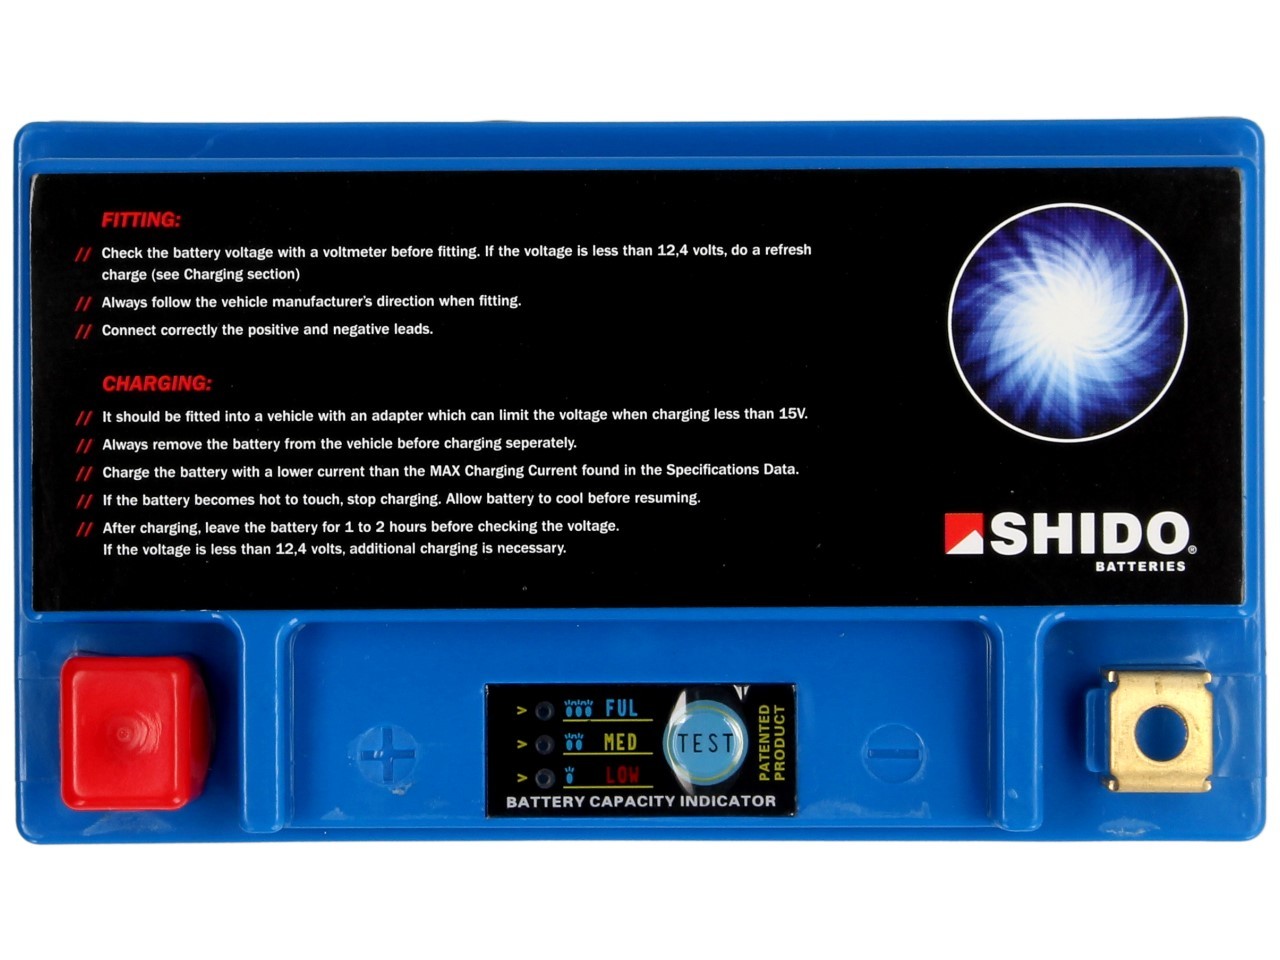 Batterie lithium-ion Shido LTZ12S HP High-Power